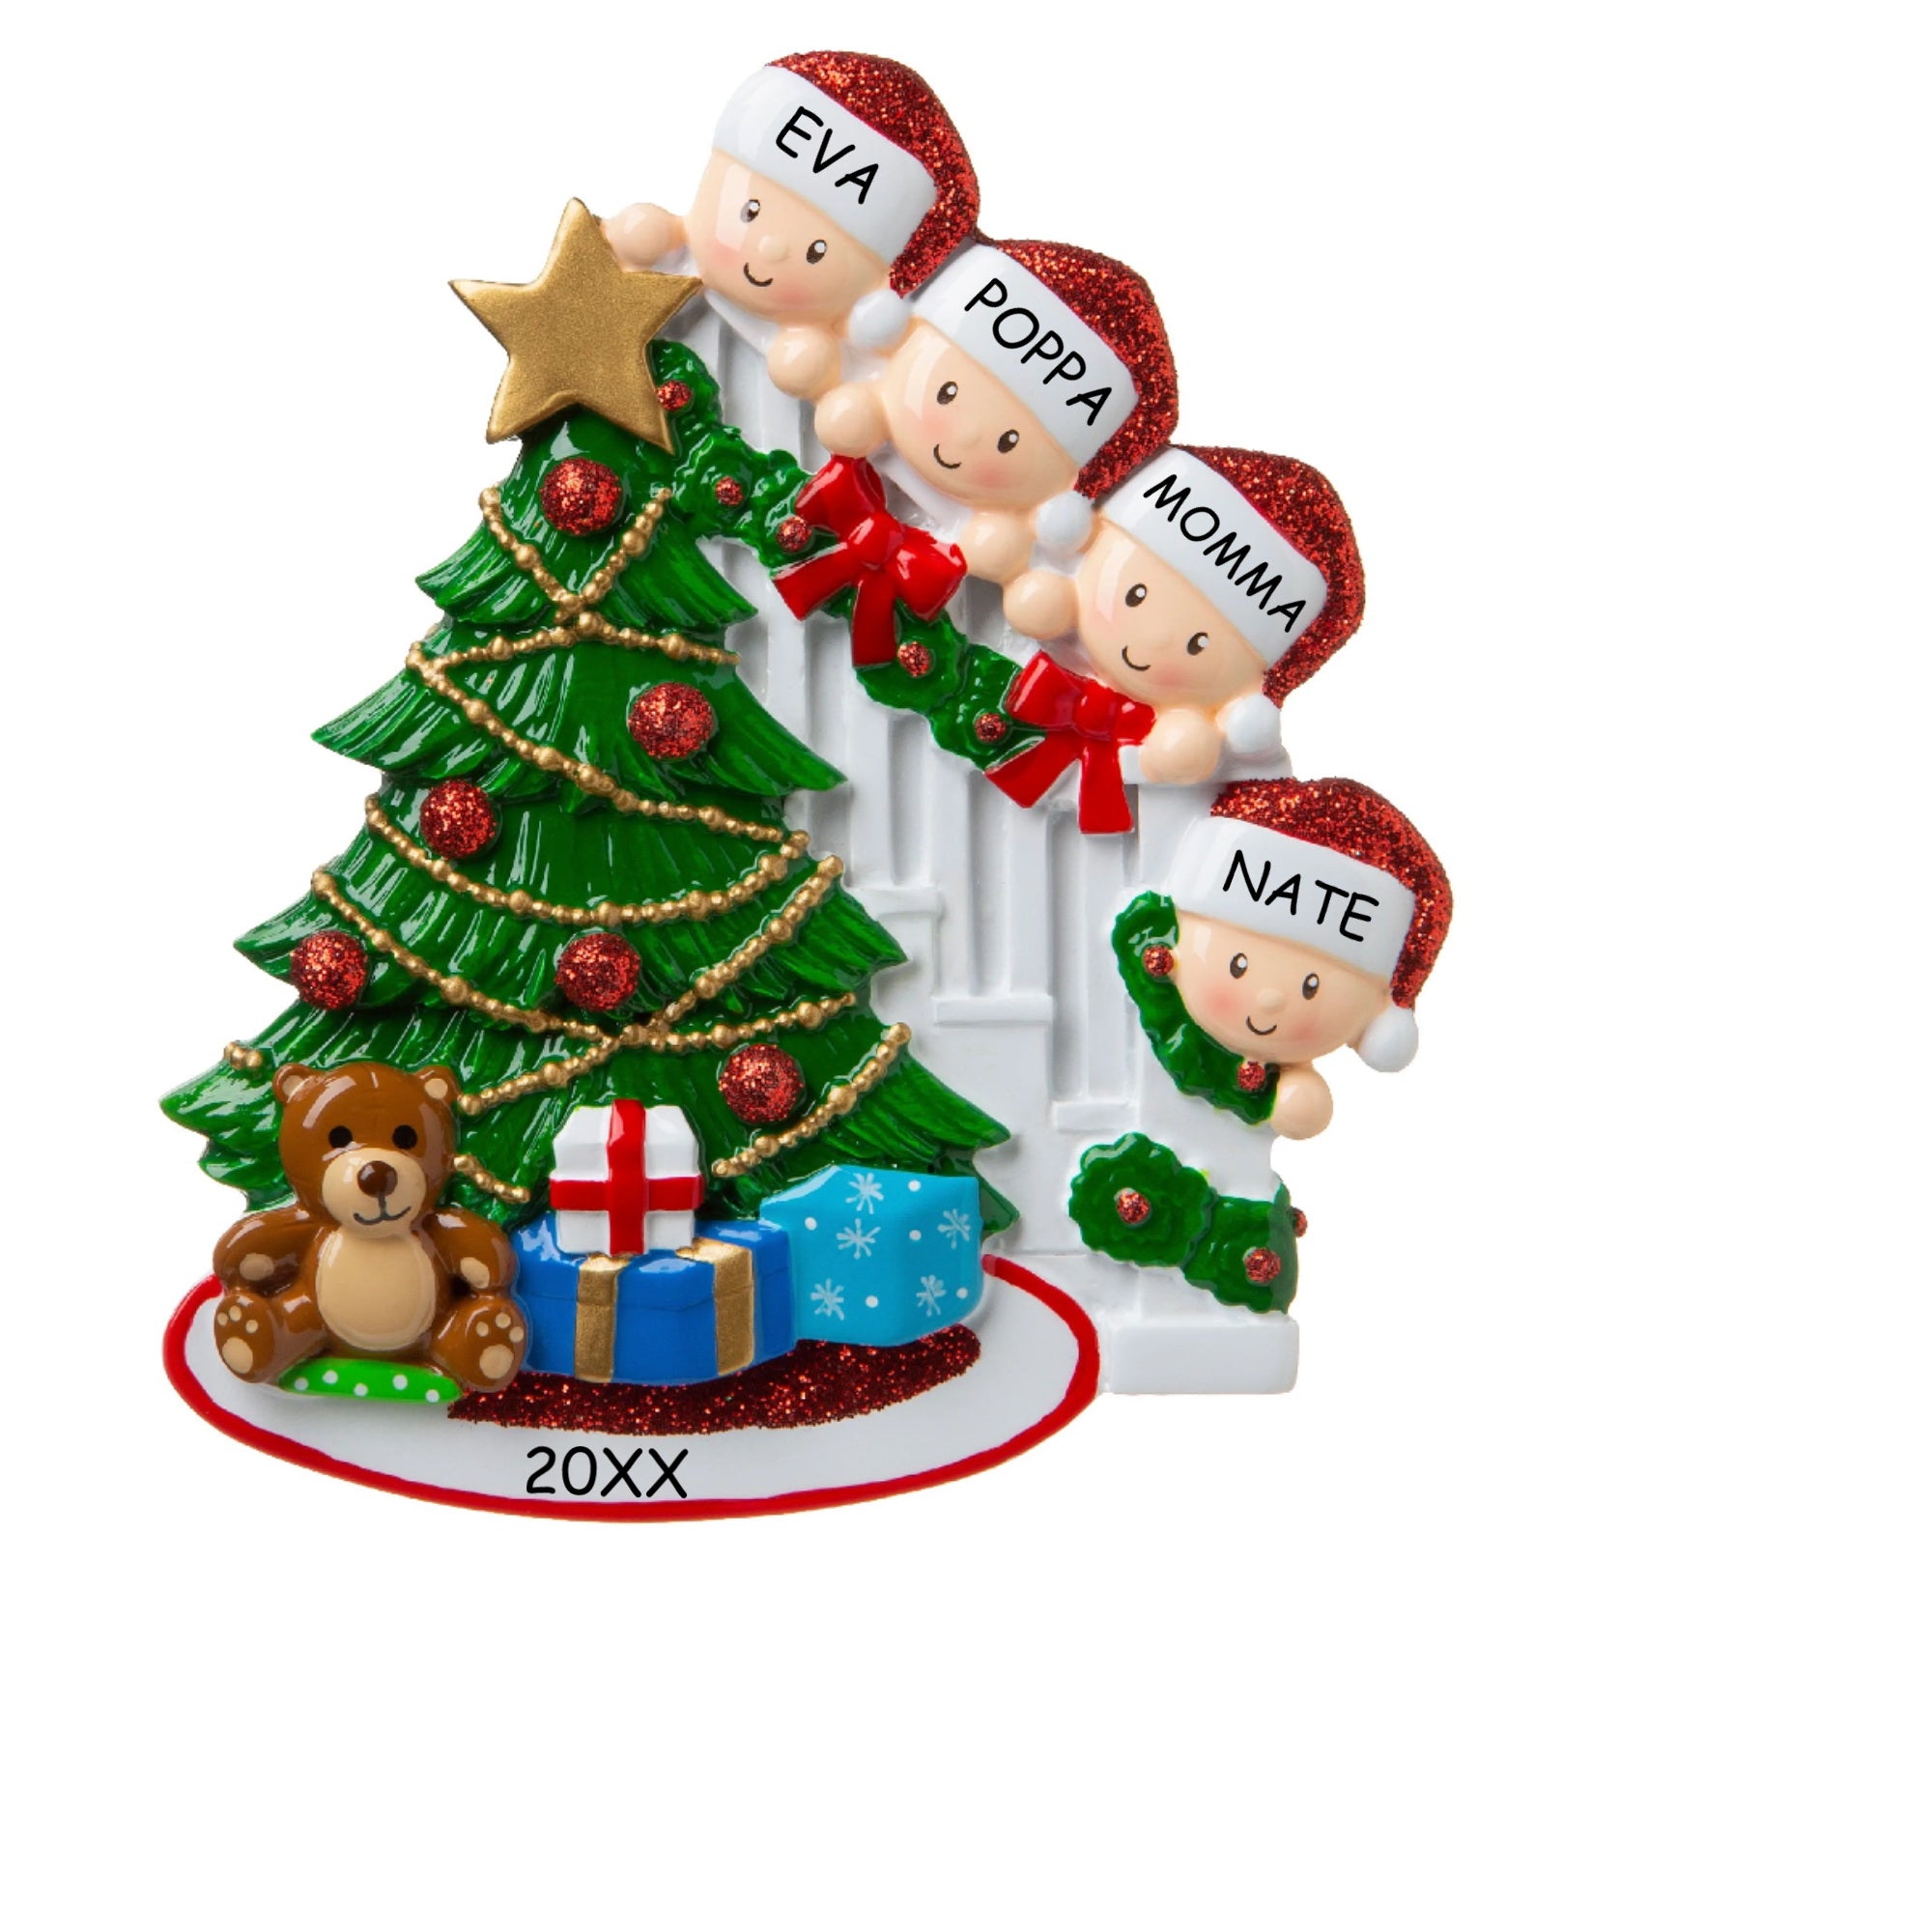 Personalized Peeking Family Christmas Ornament - Family of 4